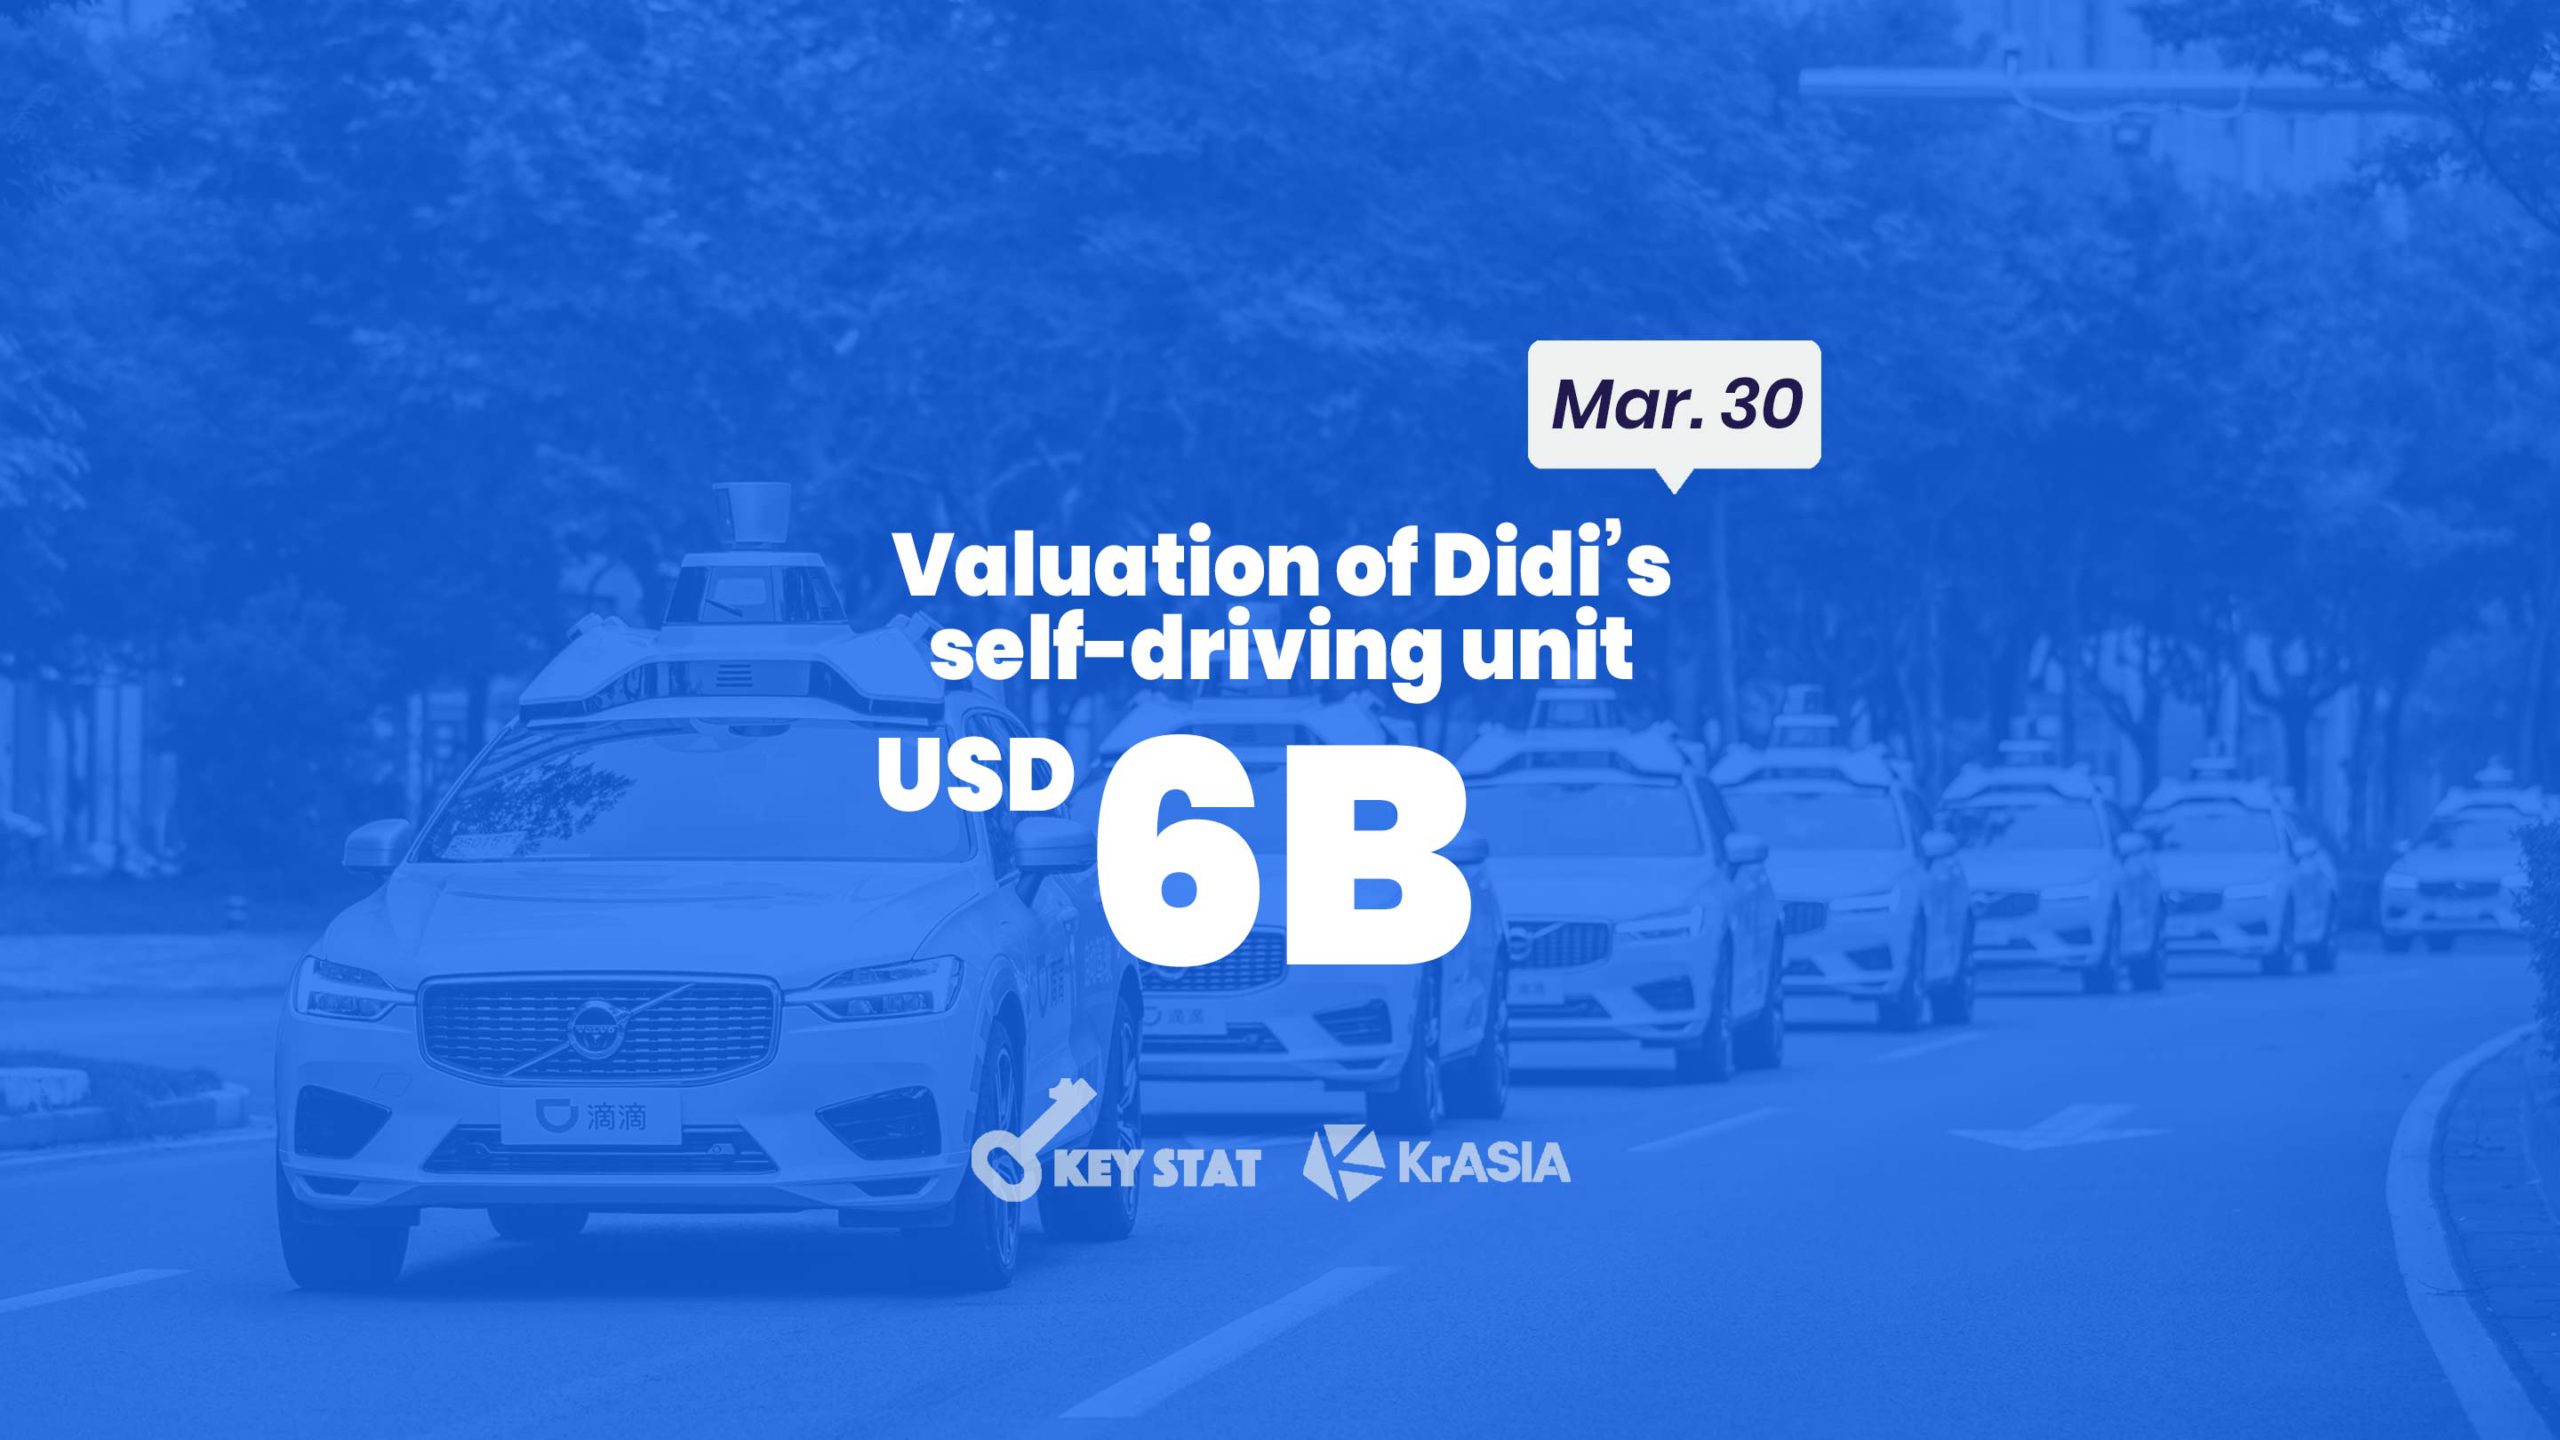 KEY STAT | Didi seeks new cash for its self-driving unit ahead of IPO